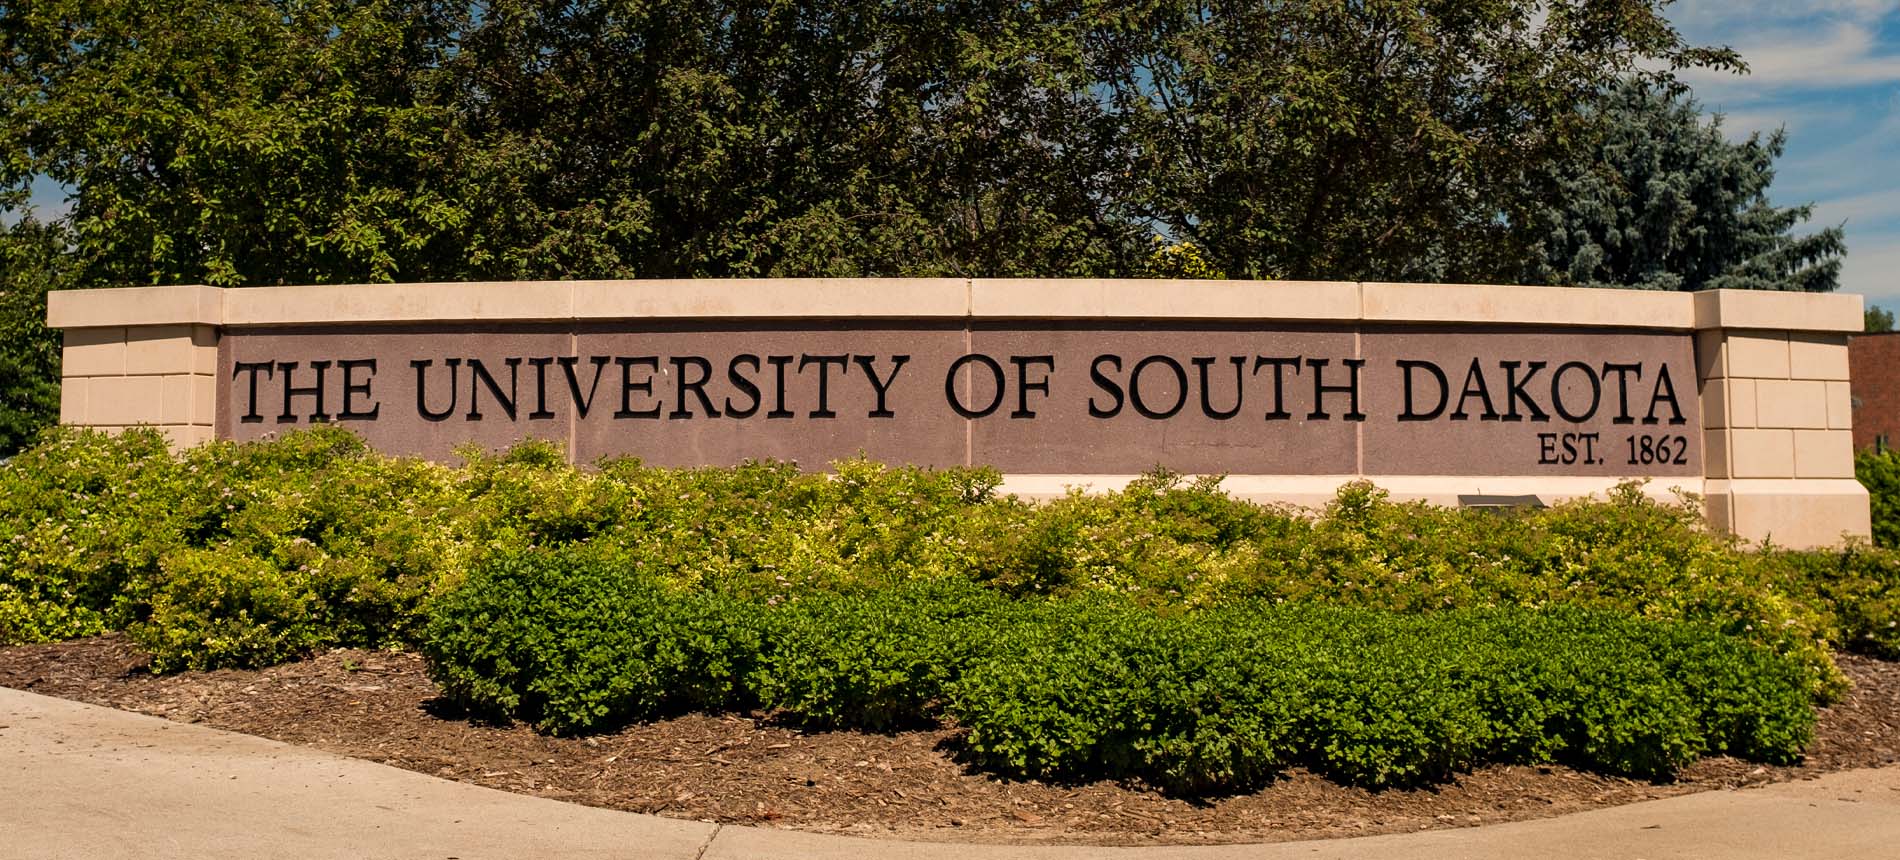 University of South Dakota Sign Behind Shrubs.